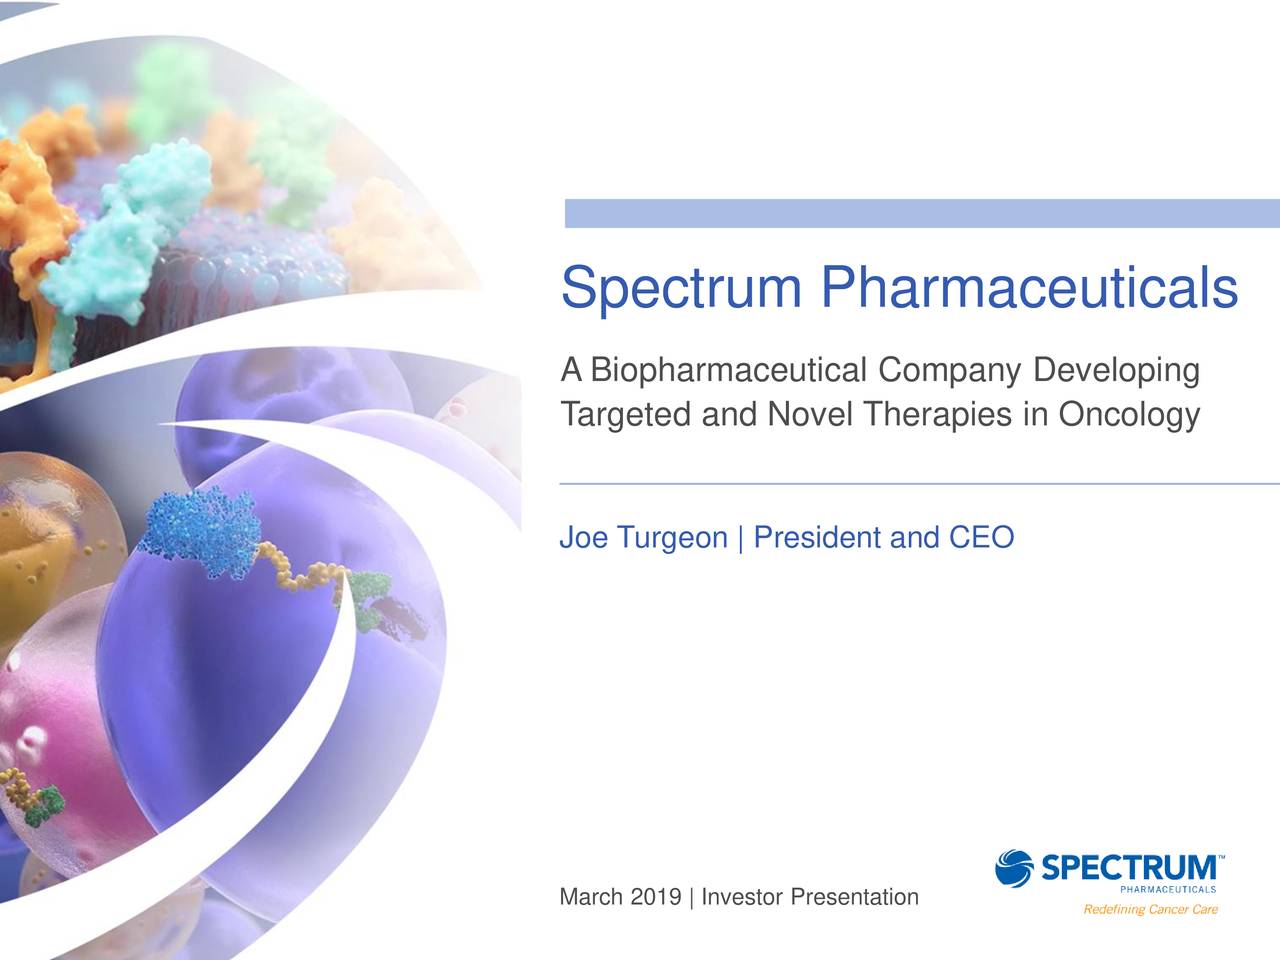 spectra pharmaceuticals